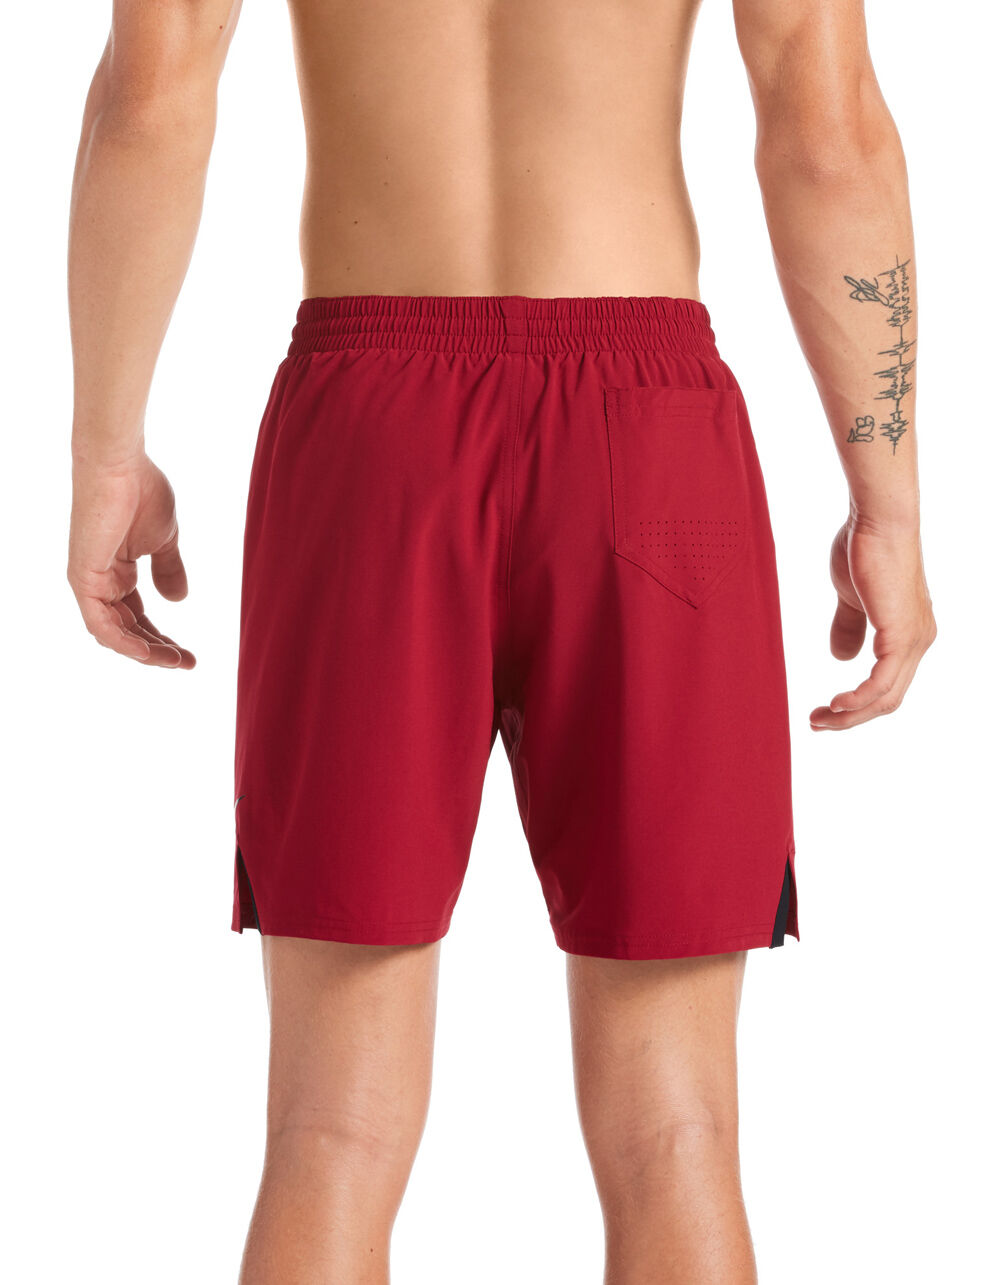 NIKE Solid Mens Red Boardshorts image number 4